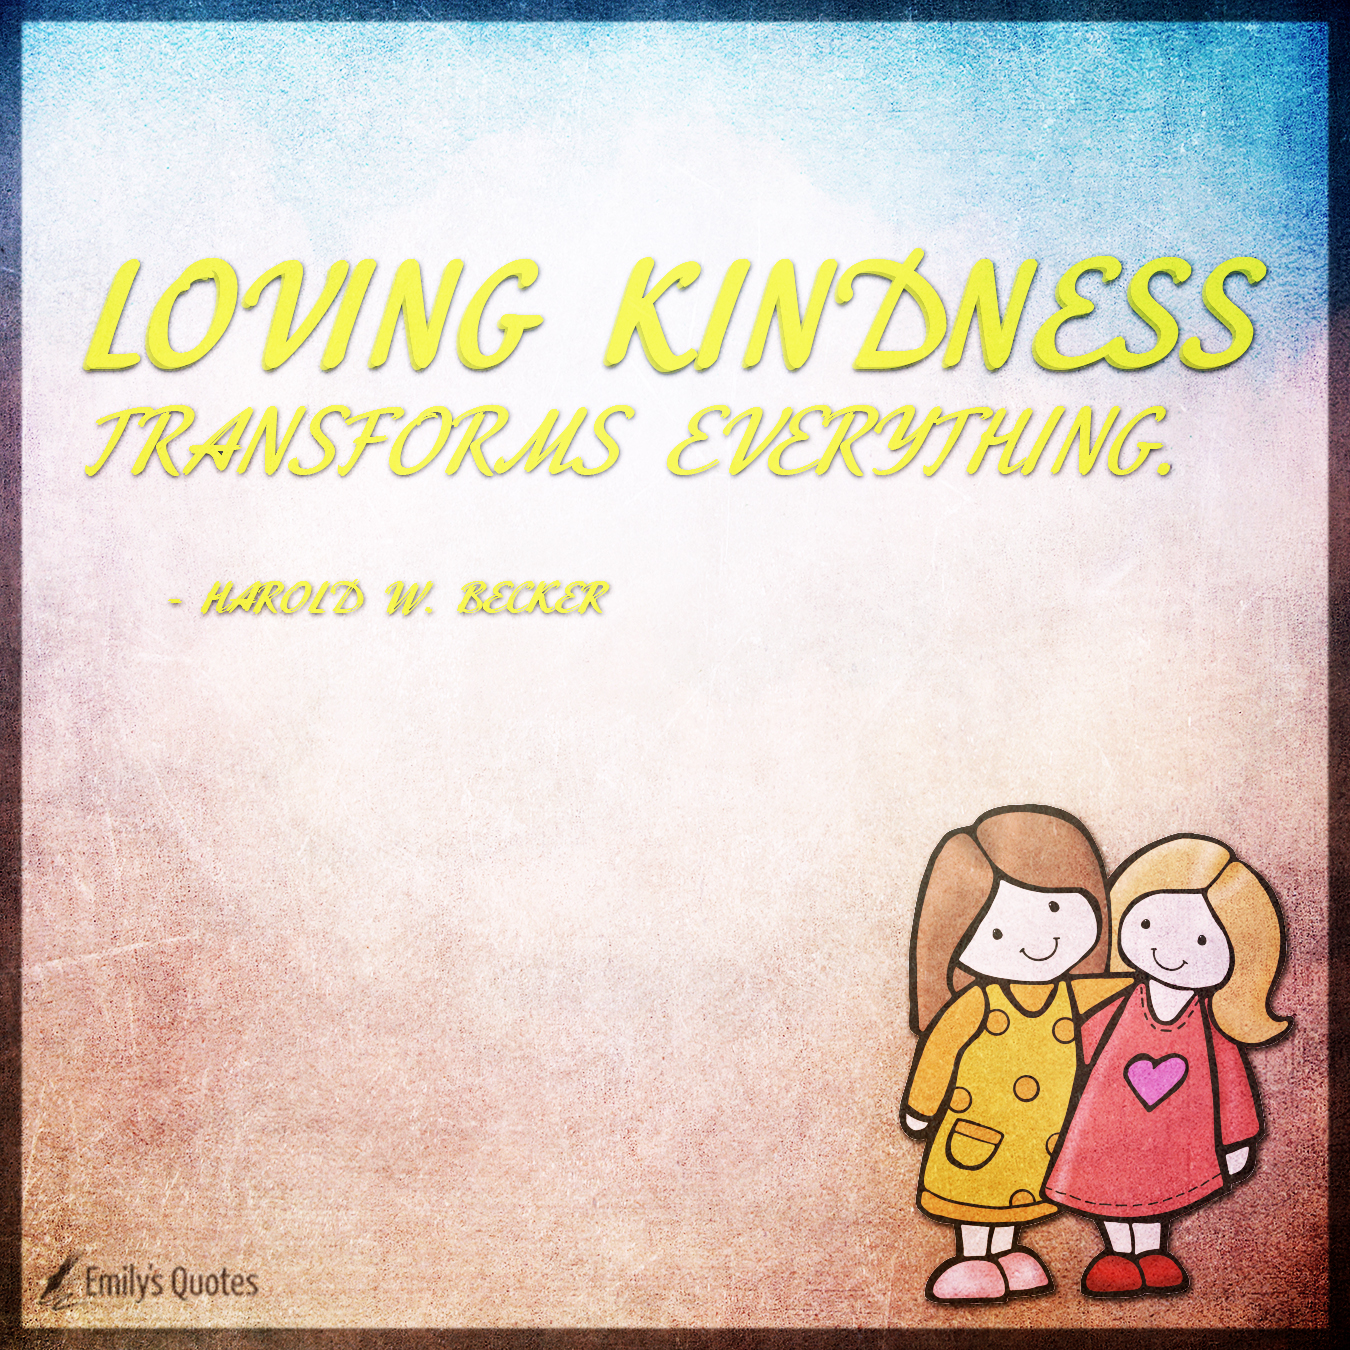 Loving kindness transforms everything